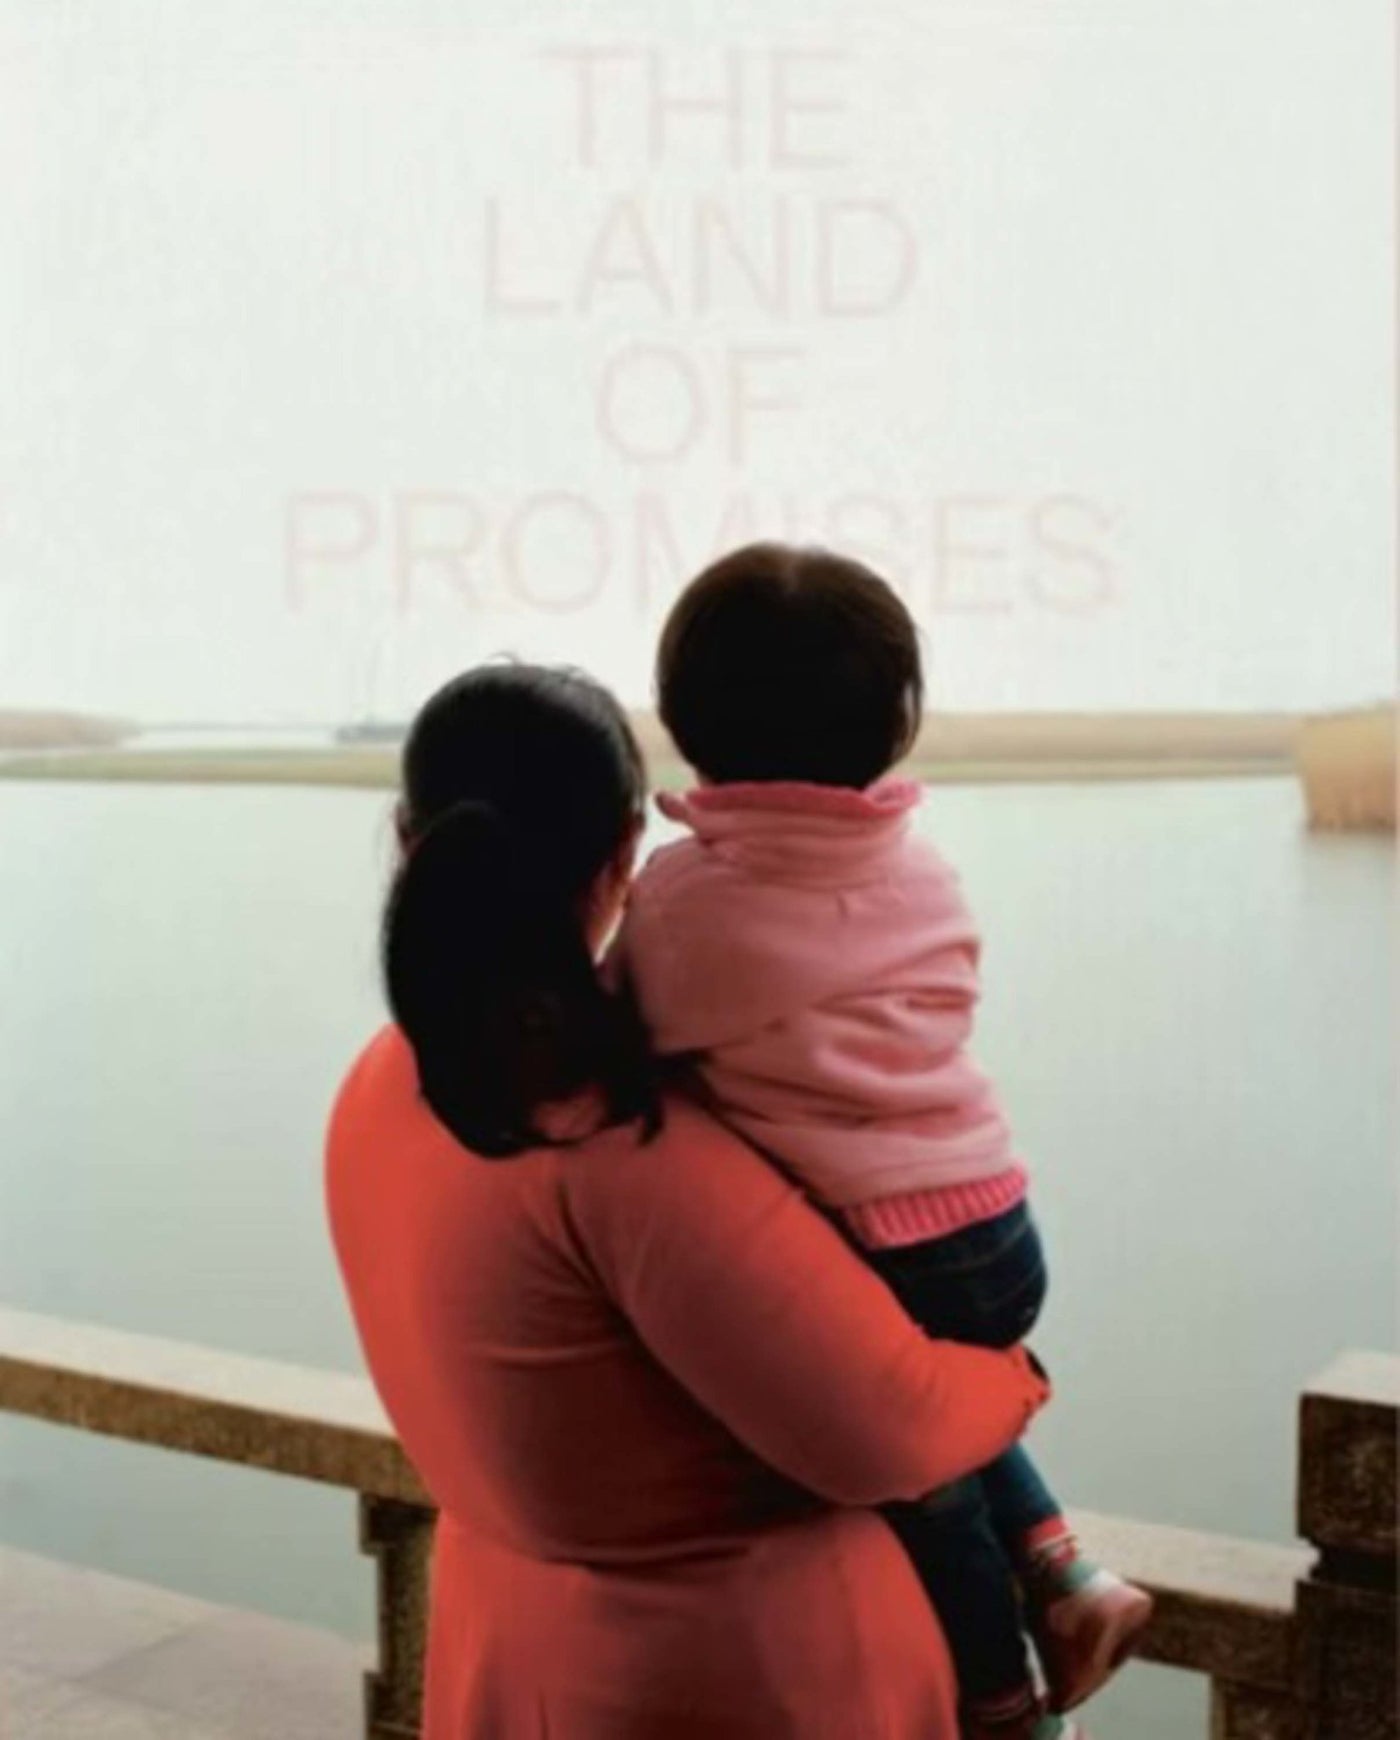 The Land of Promises by Youqine Lefèvre - Tipi bookshop